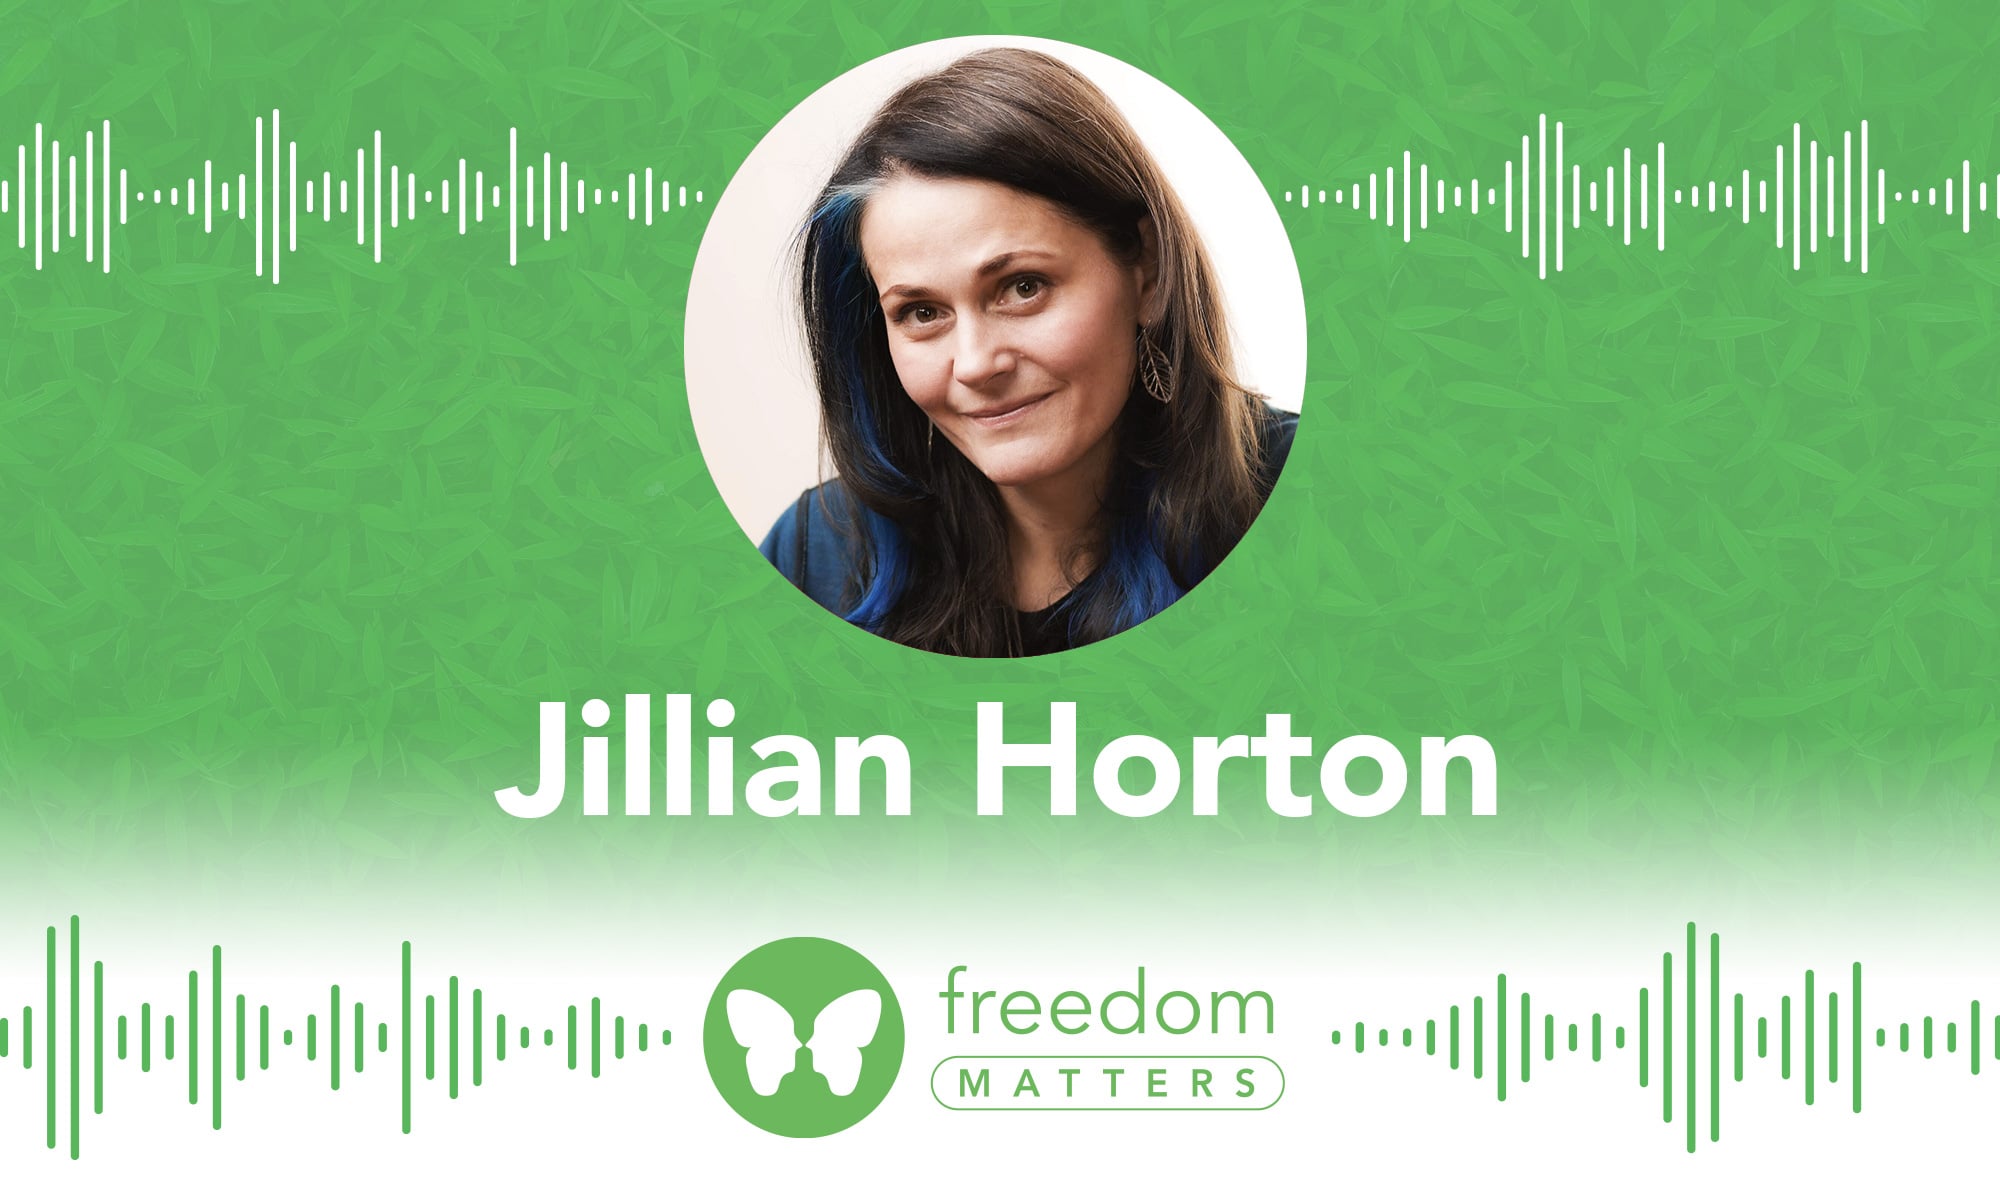 Freedom Matters Jillian Horton